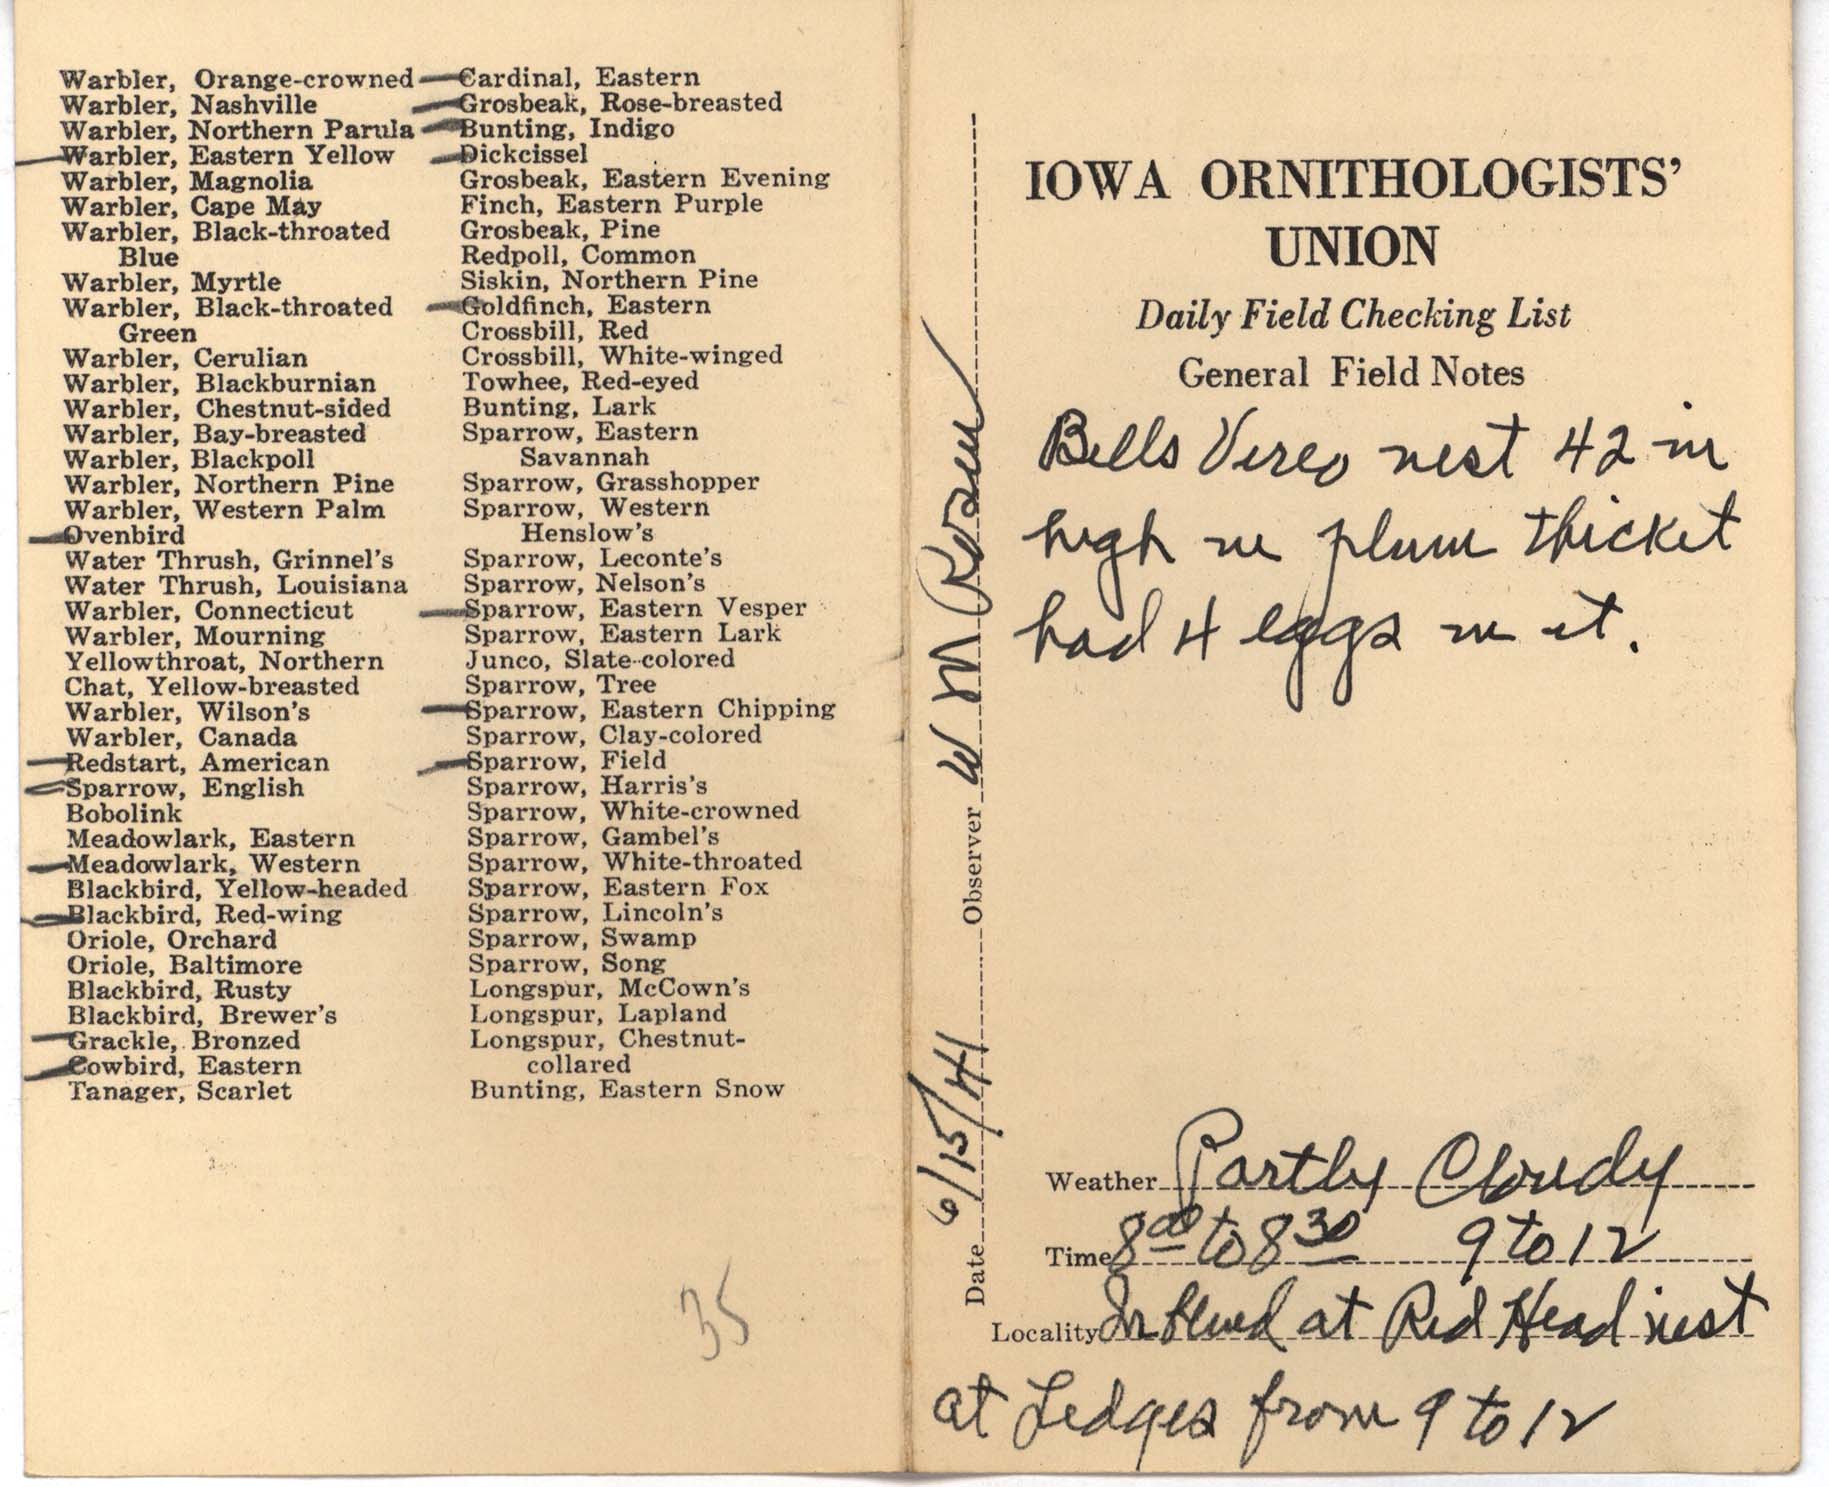 Daily field checking list by Walter Rosene, June 15, 1941